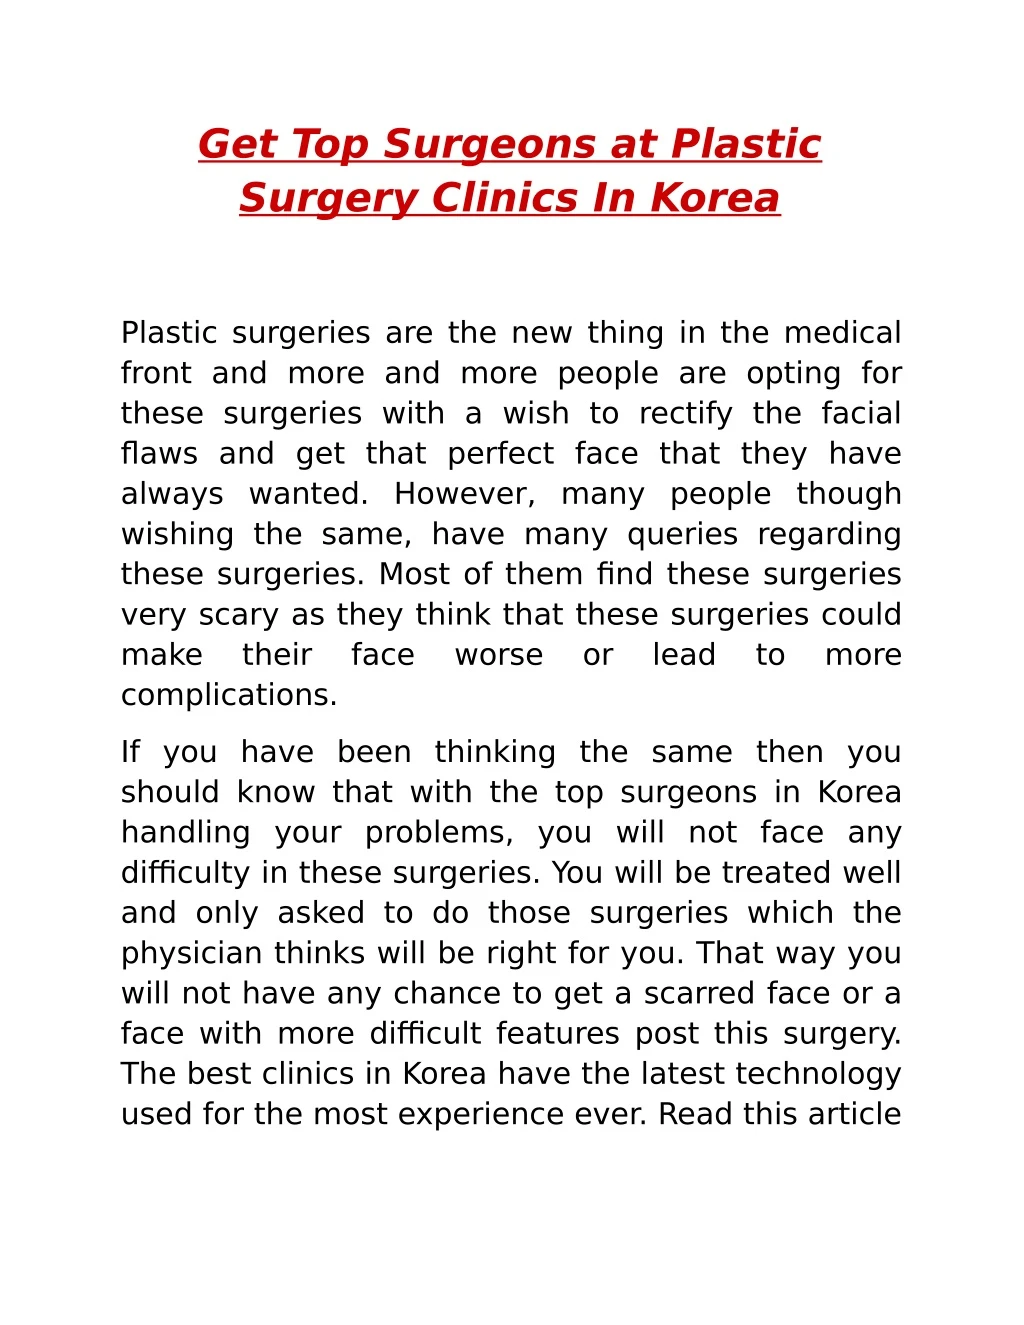 get top surgeons at plastic surgery clinics